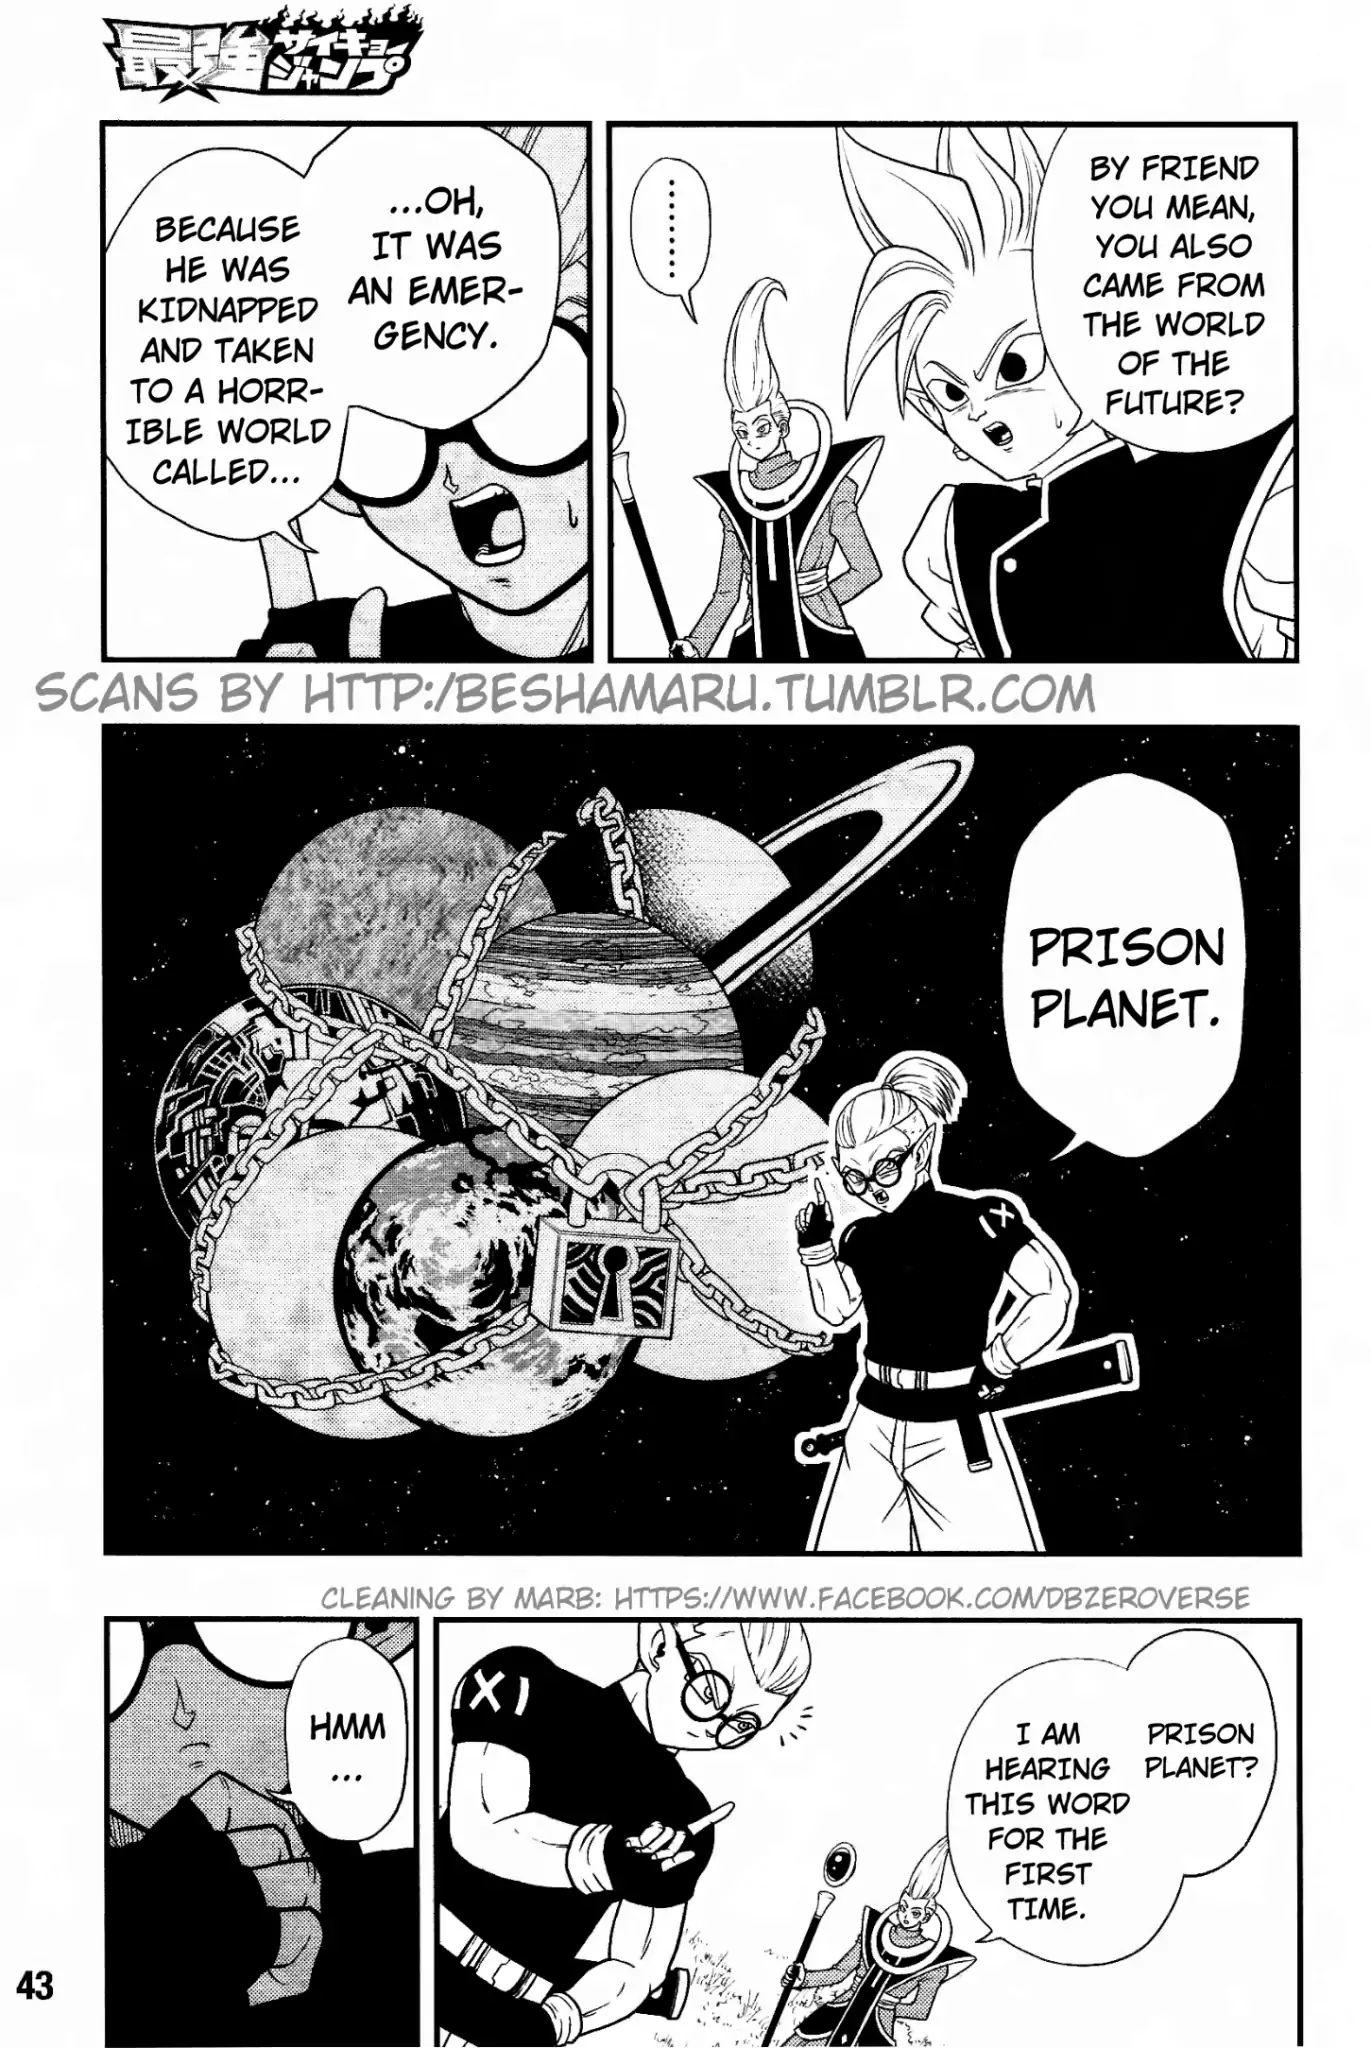 Dragon Ball Heroes Prison Planet Manga Chapter 1 Review 